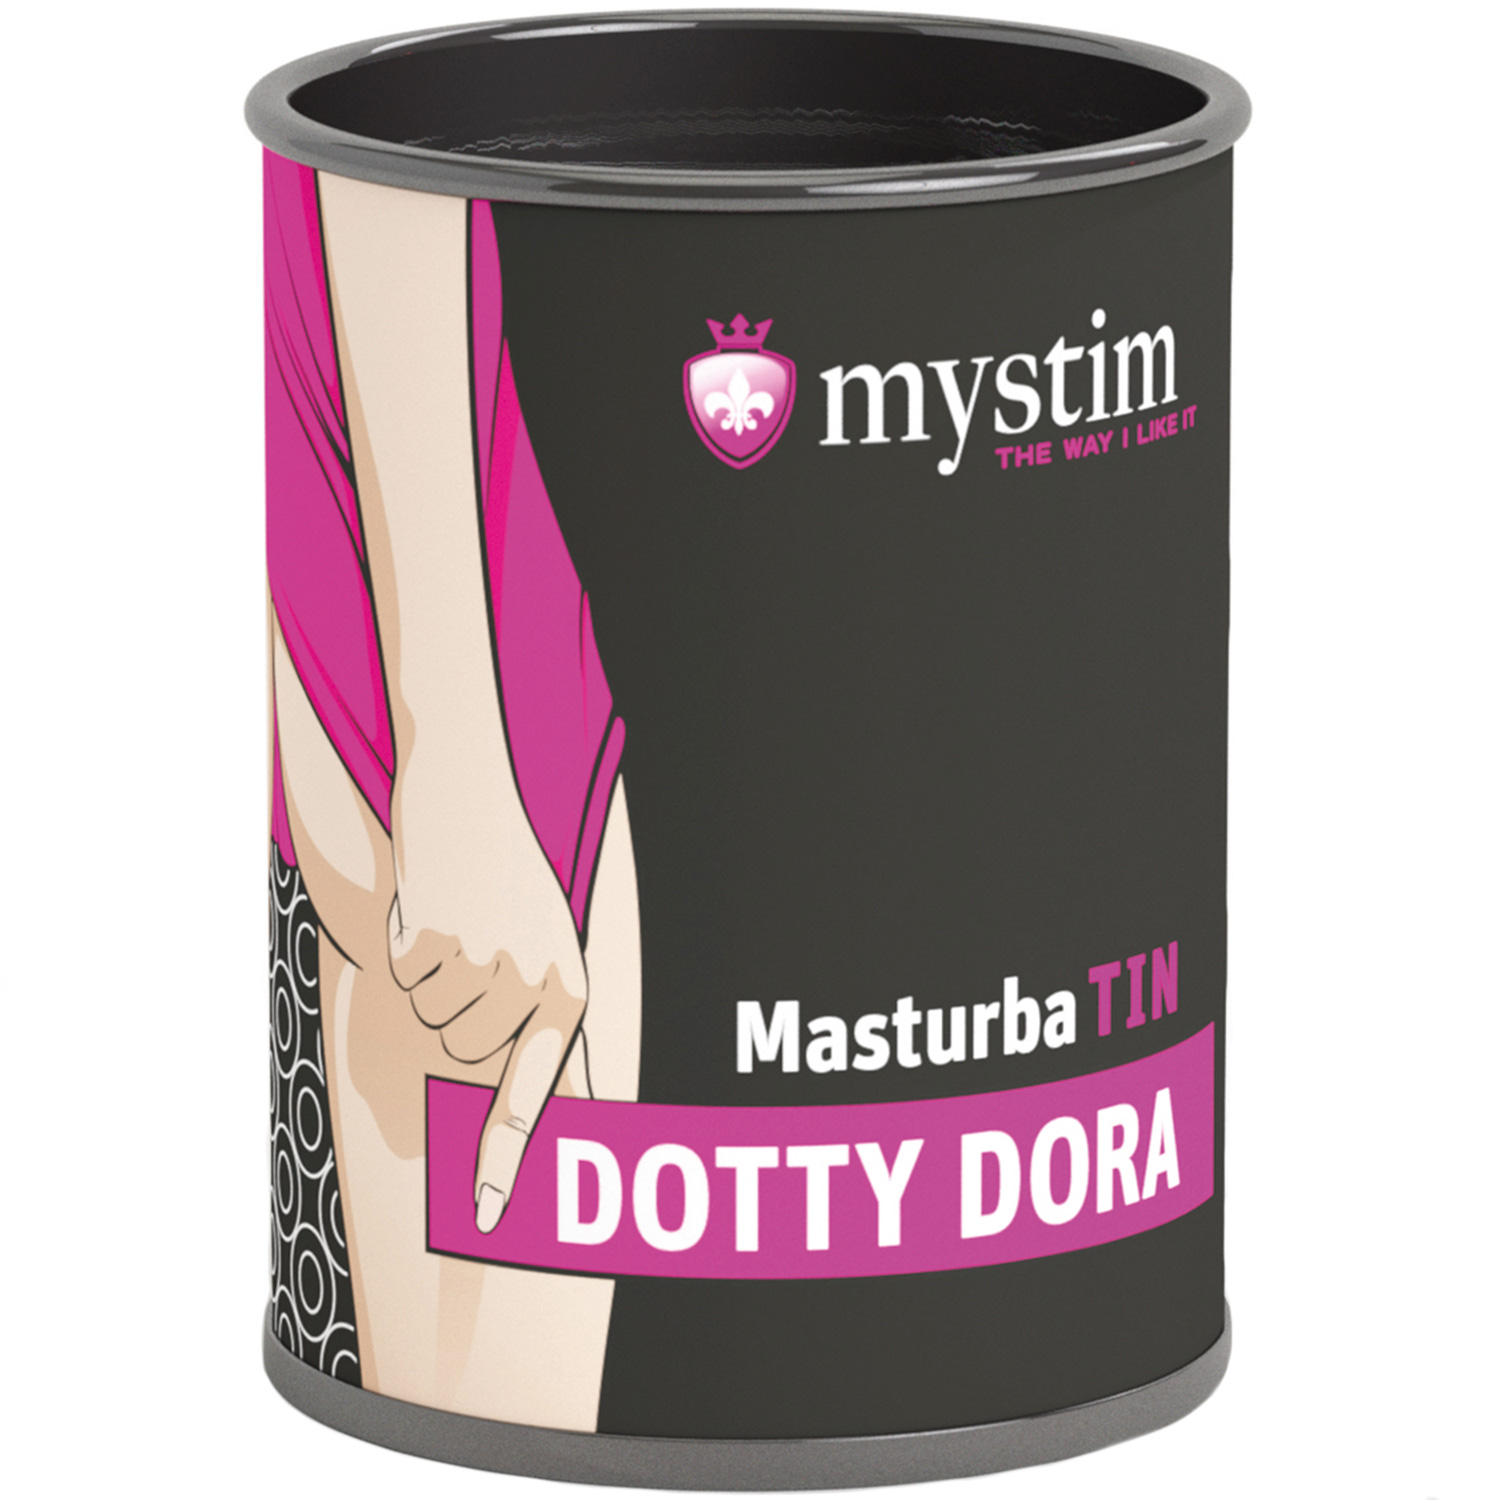 Mystim Dotty Dora MasturbaTIN - Vit